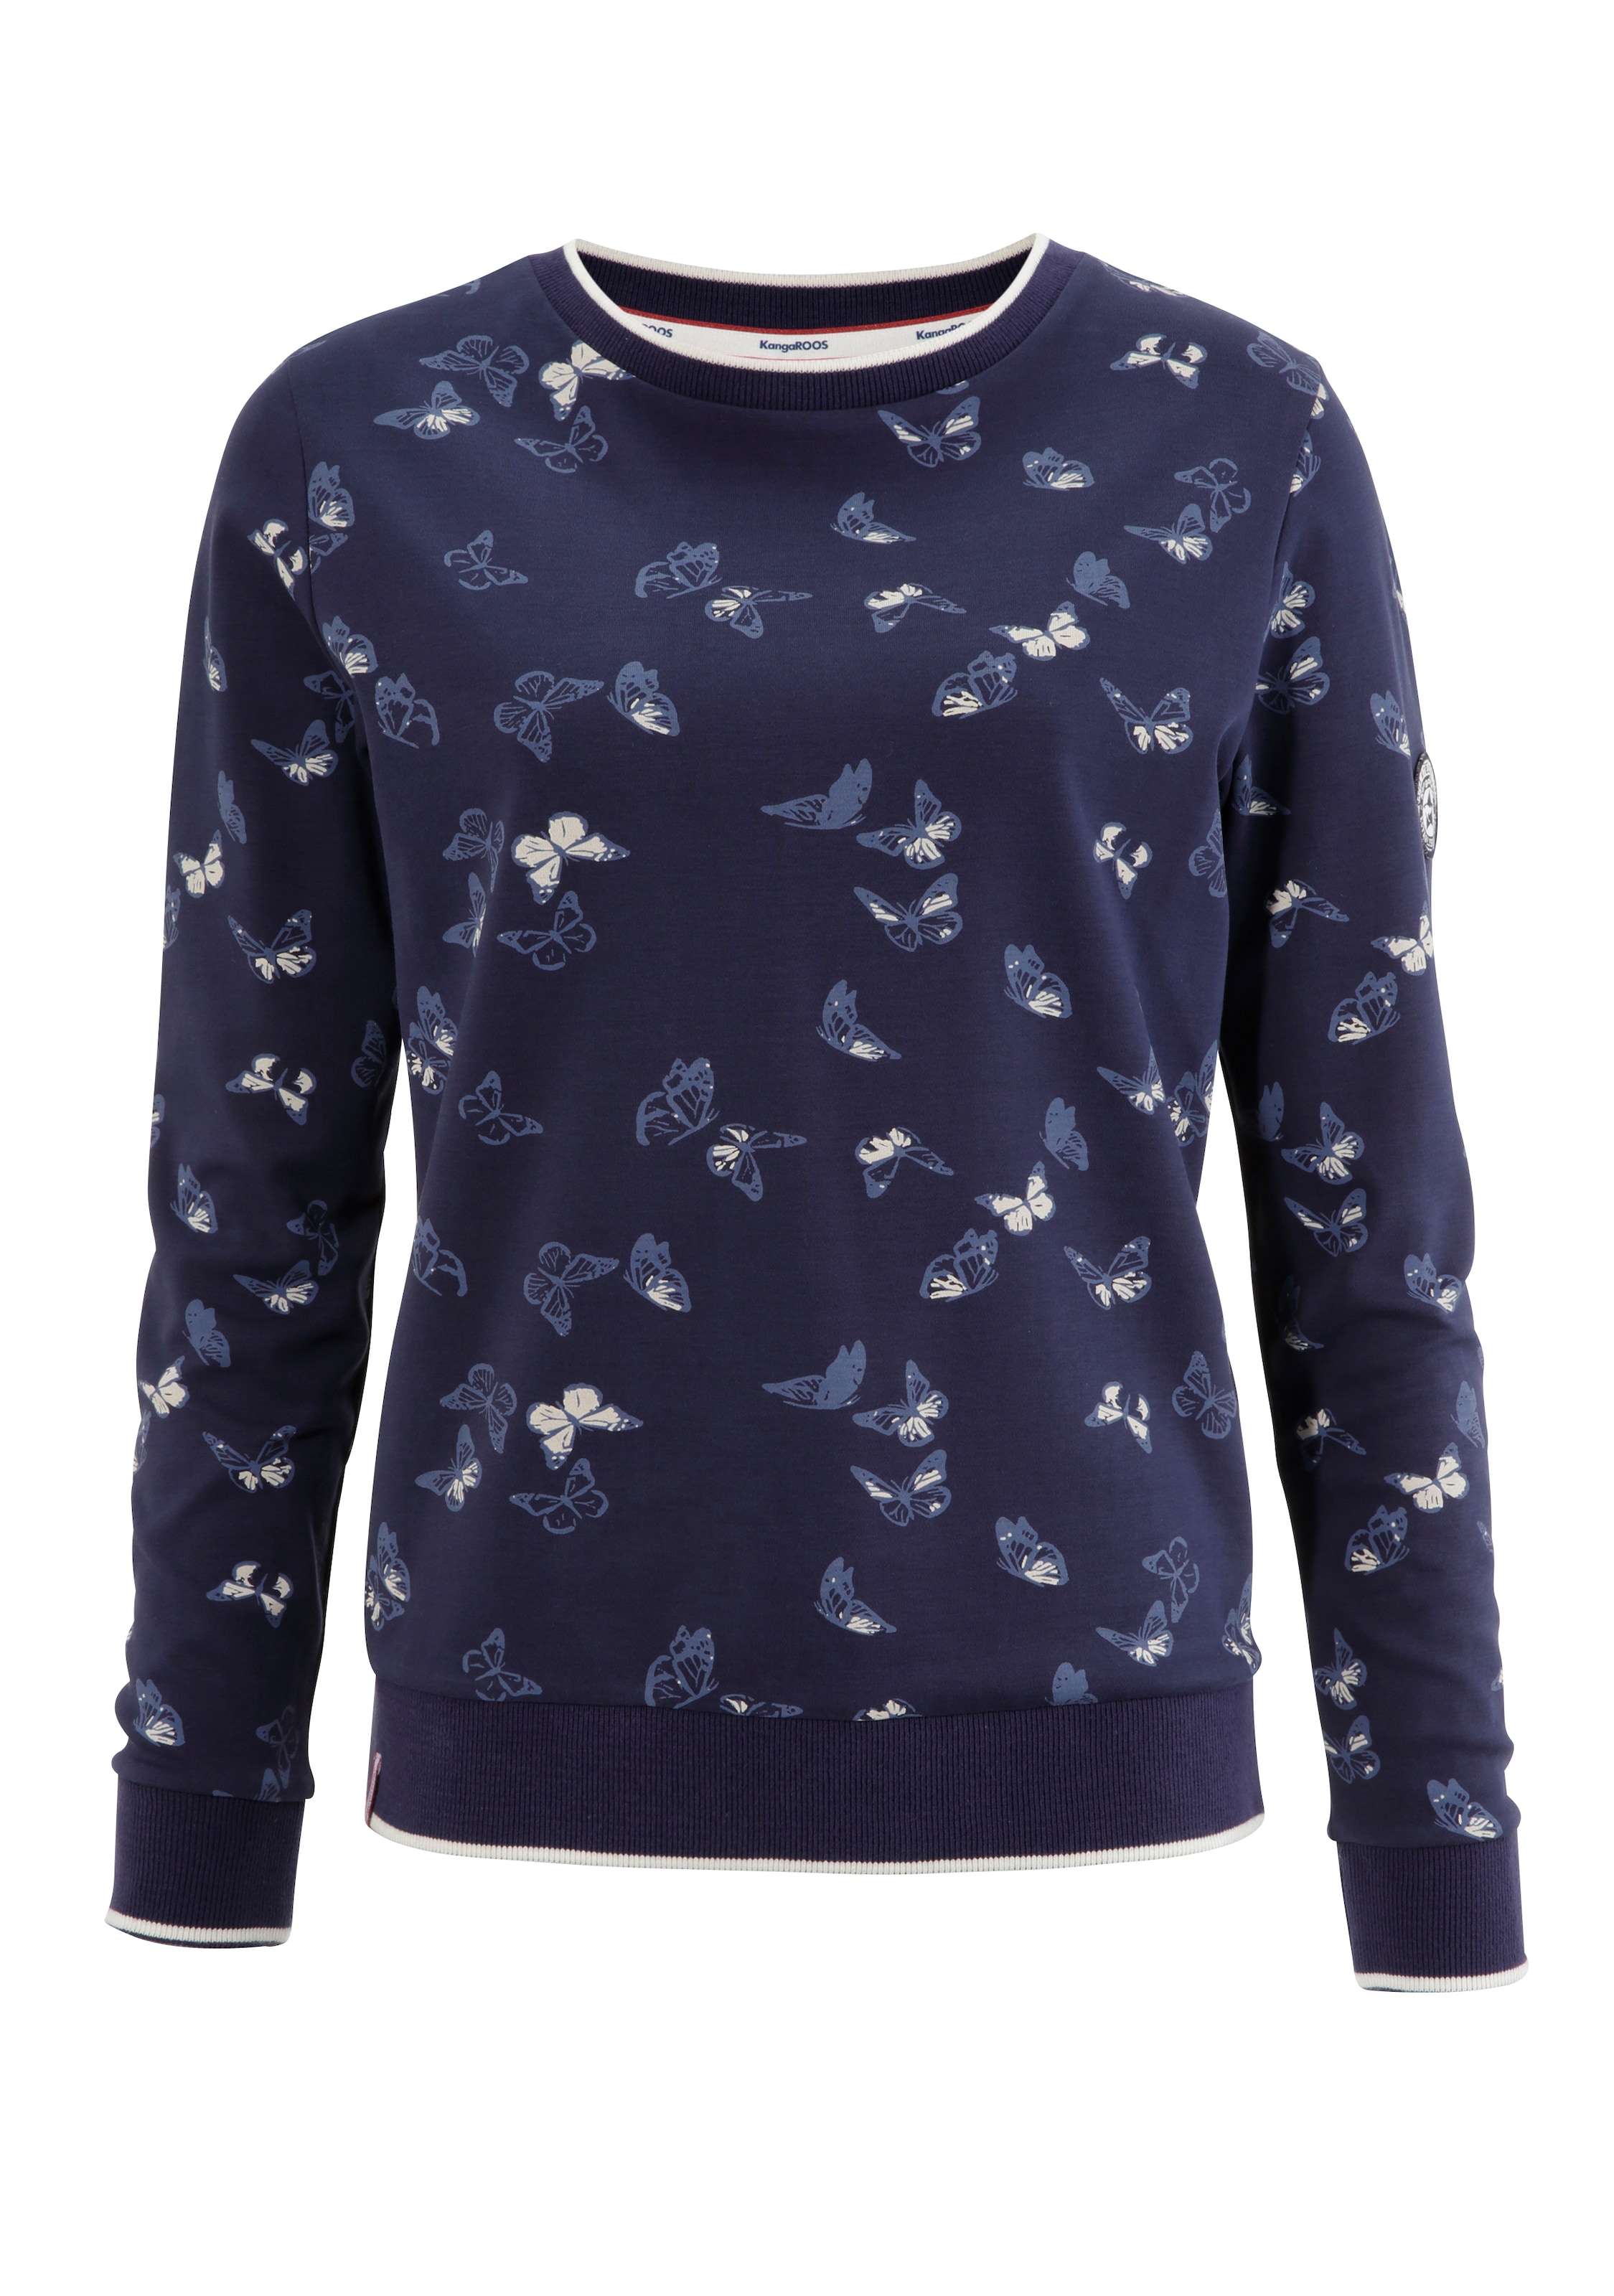 KangaROOS Sweatshirt, mit trendigem Schmetterlings-Allover-Druck